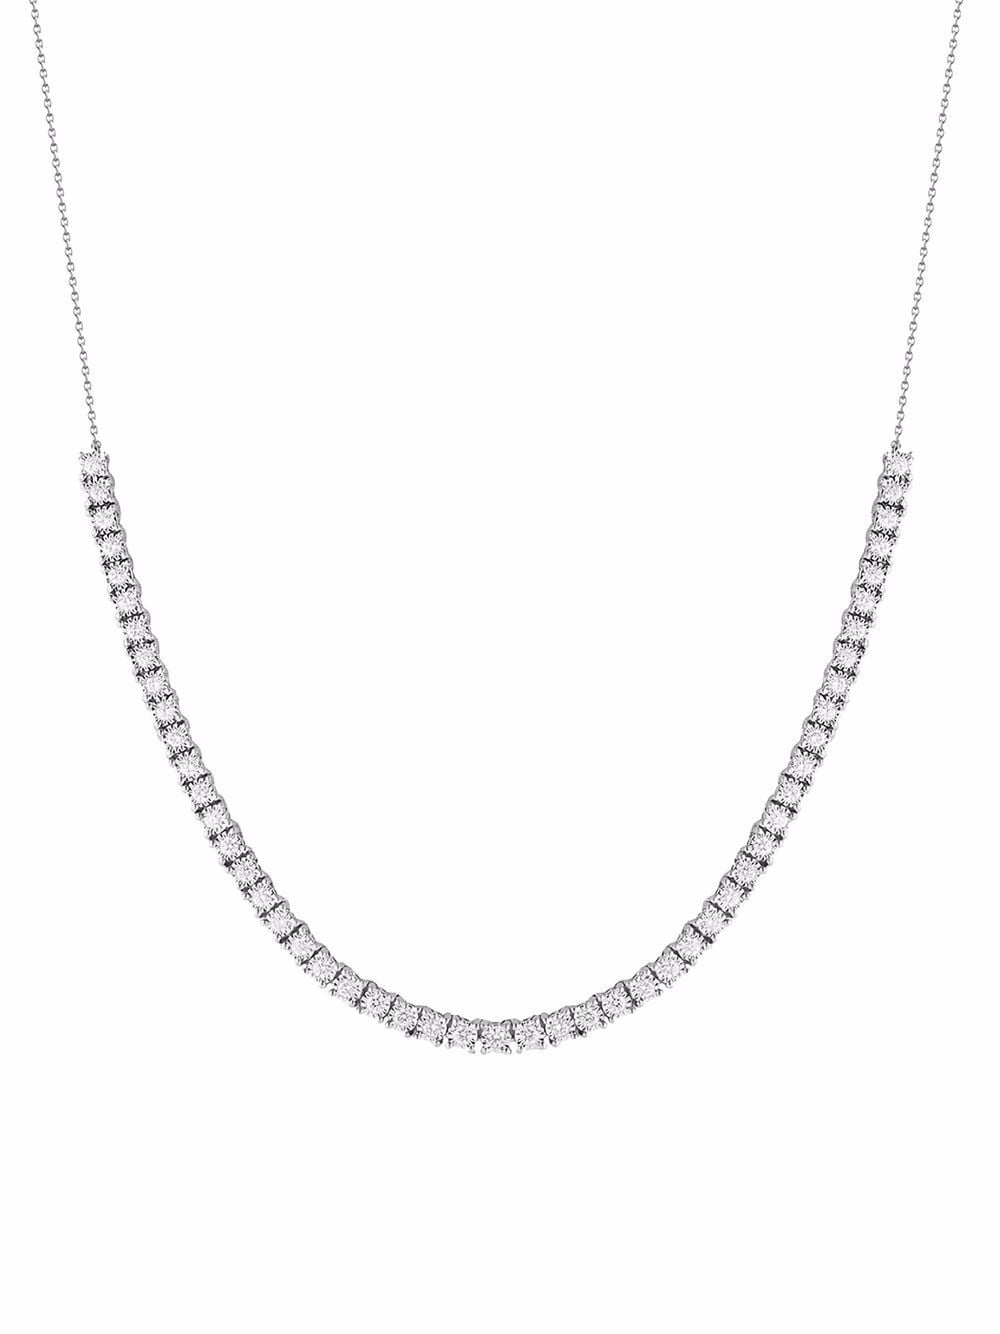 14kt white gold Ava Bea diamond tennis necklace